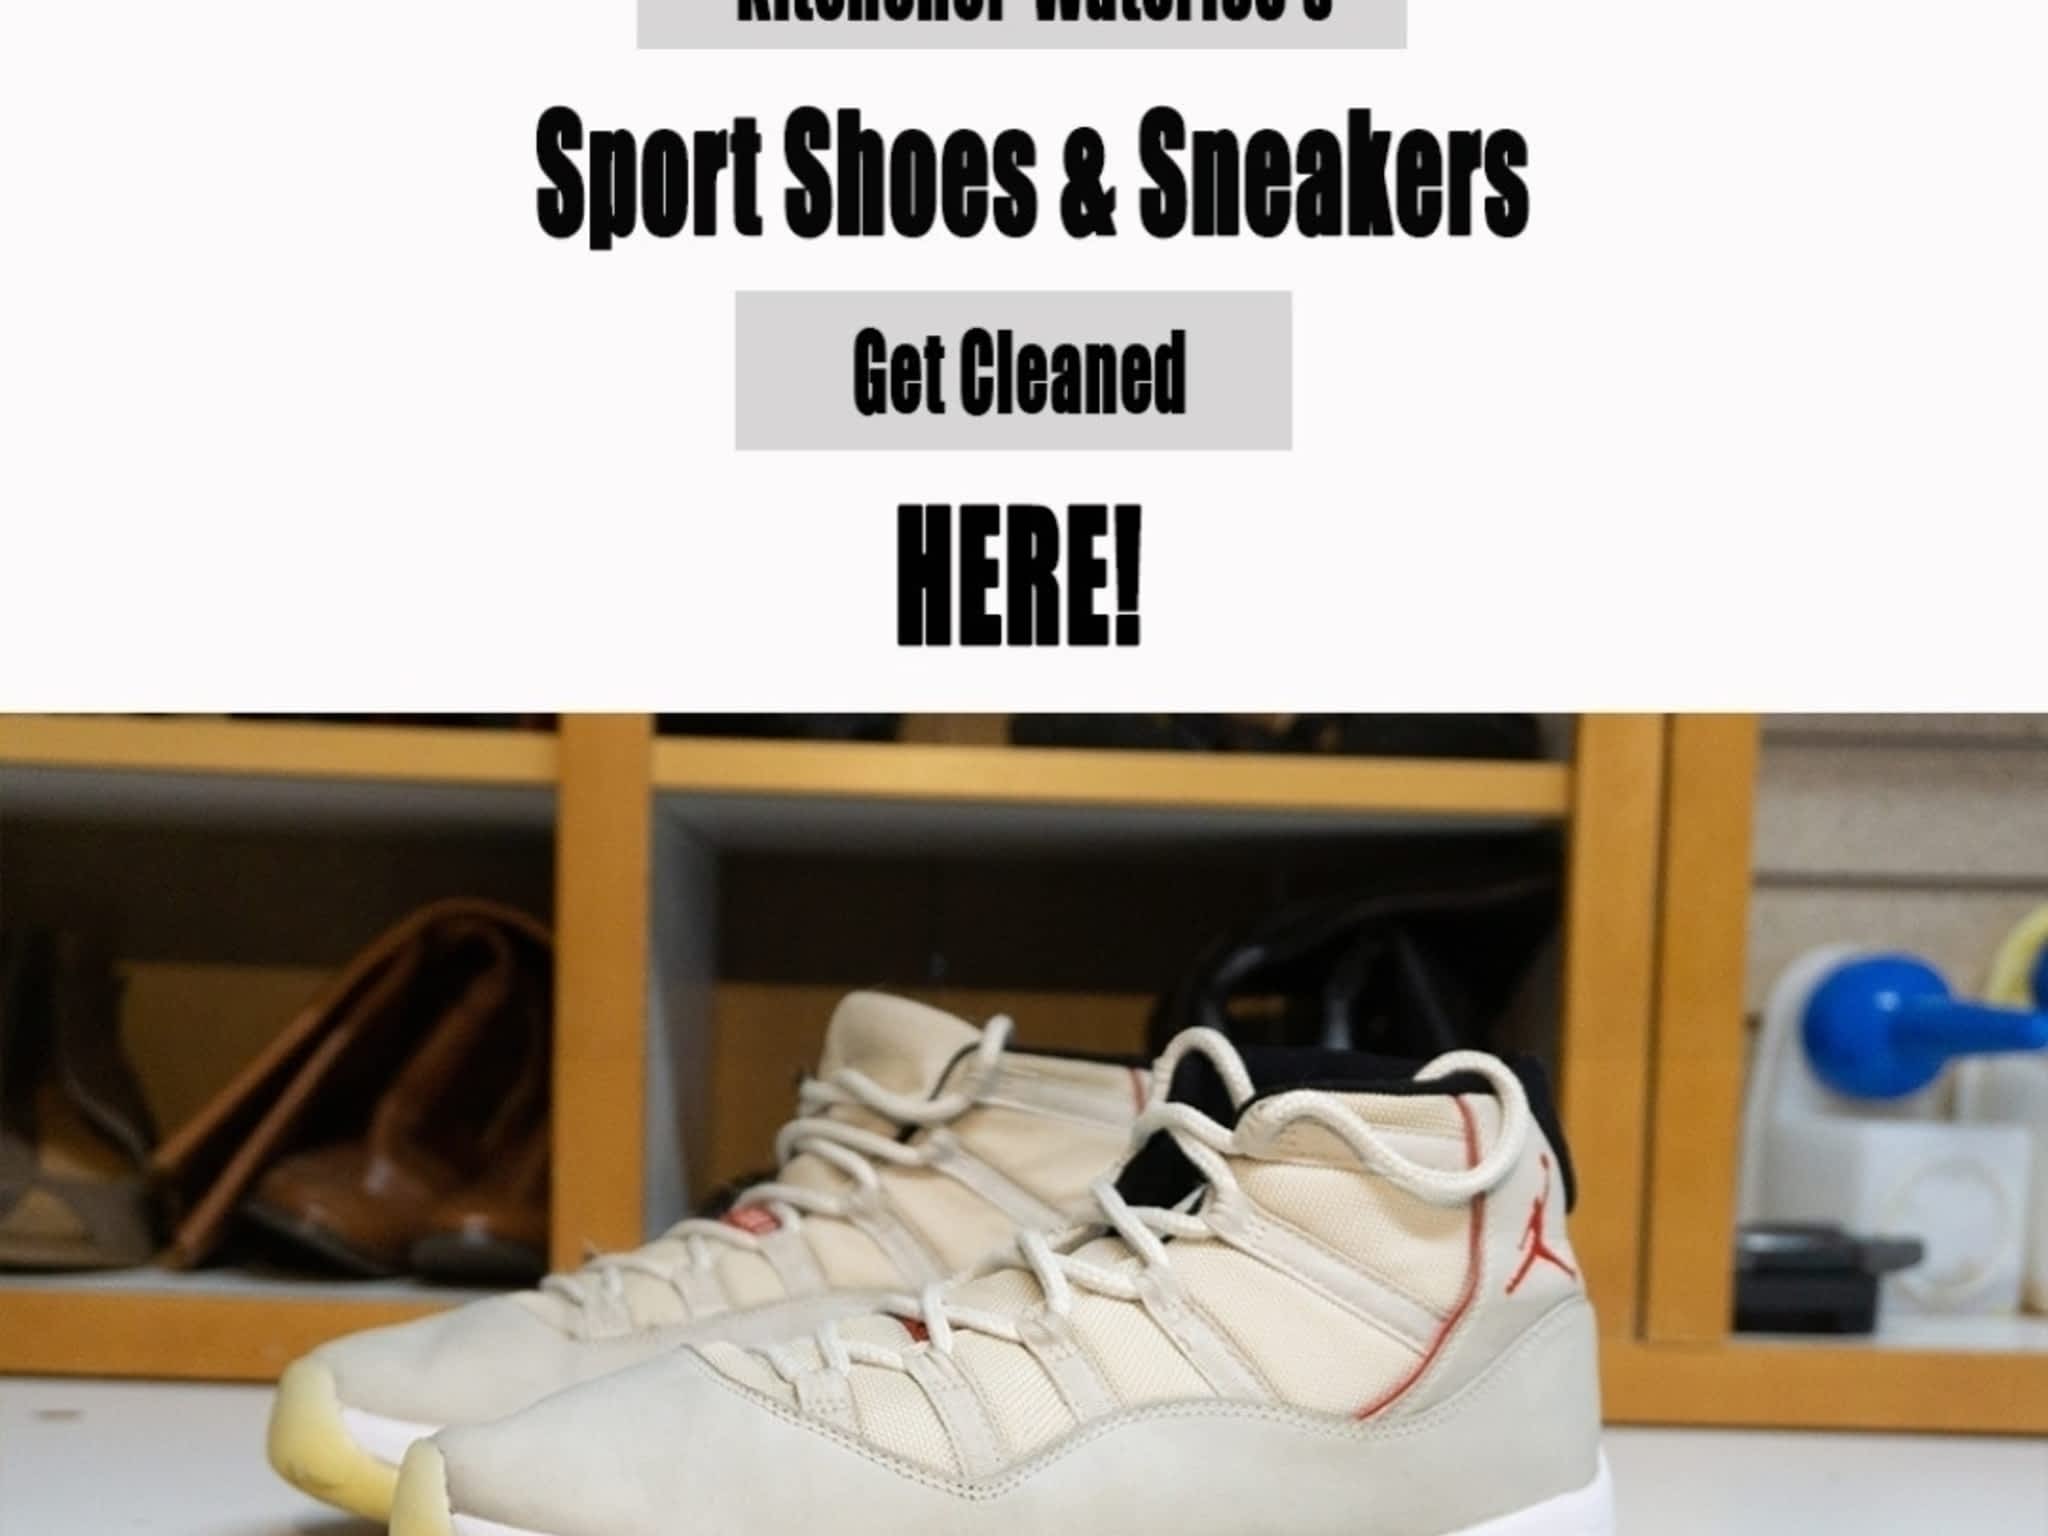 photo KW Shoe Repair & Sneaker Cleaning Service